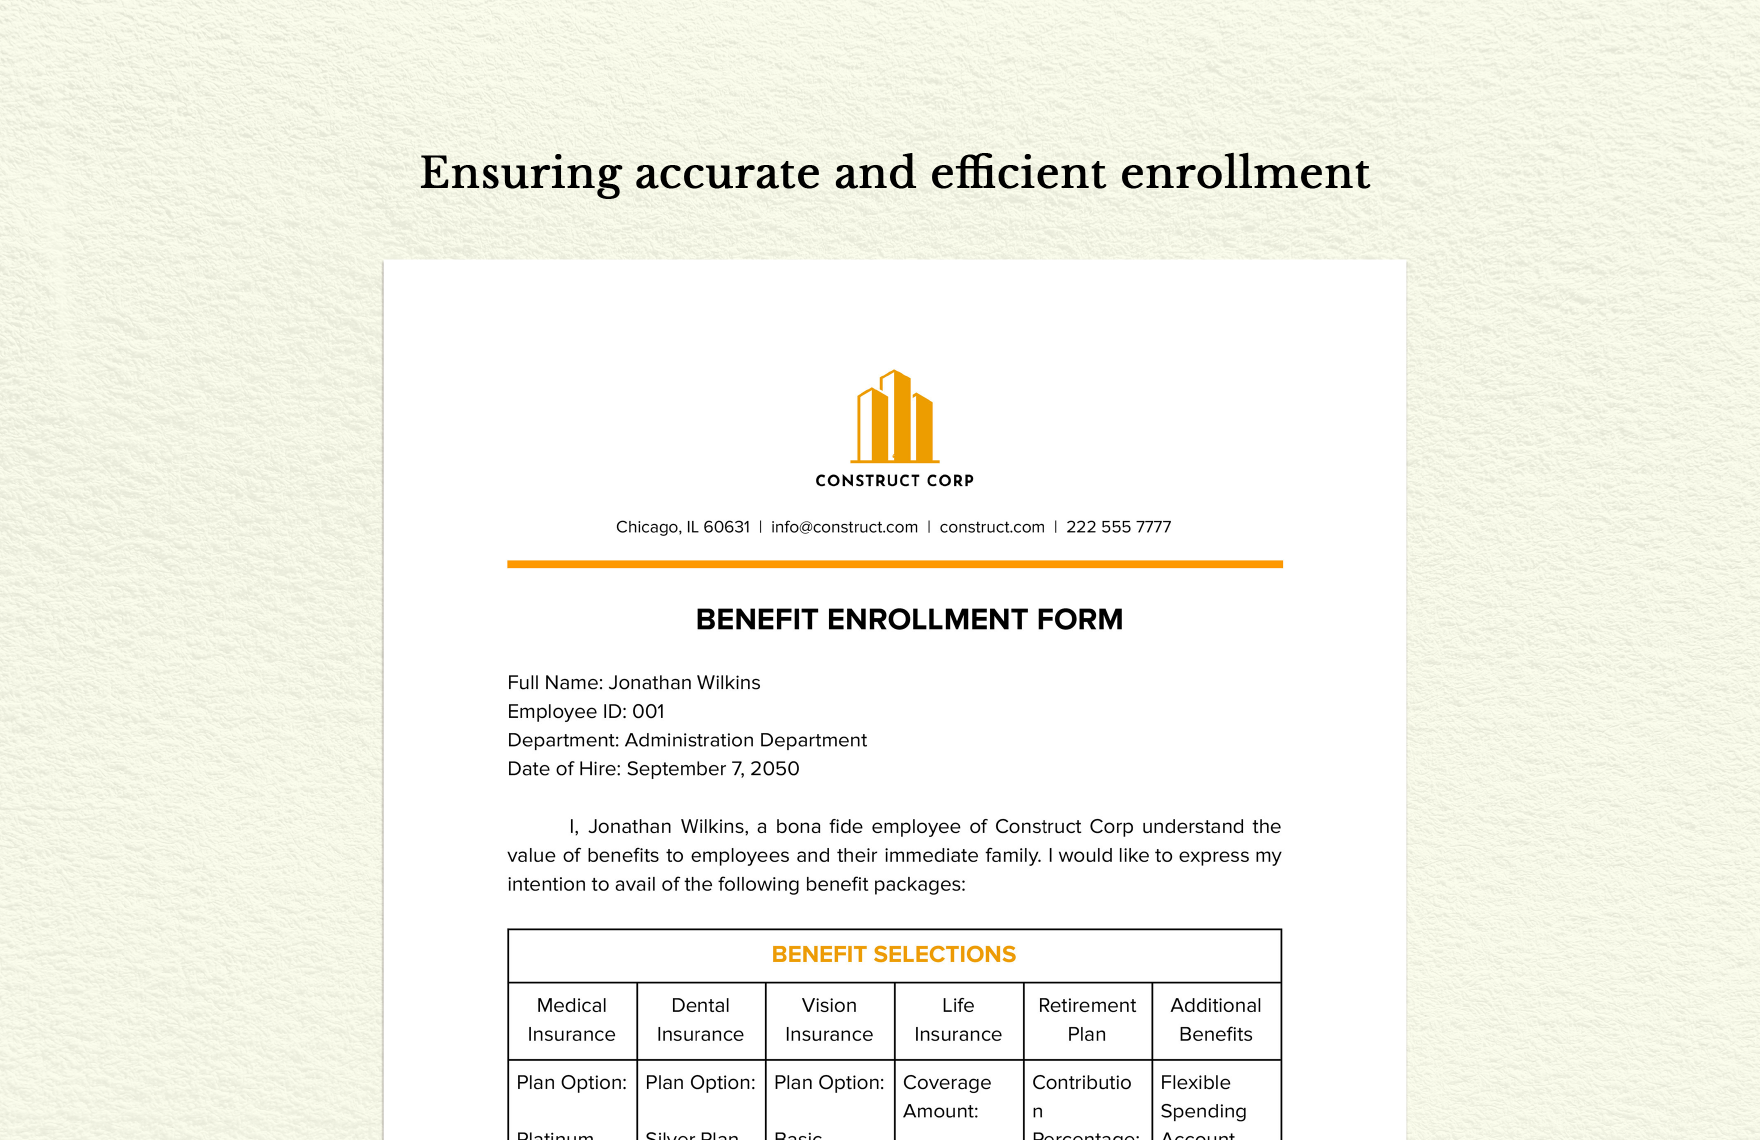 Benefit Enrollment Form in Word, Google Docs - Download | Template.net